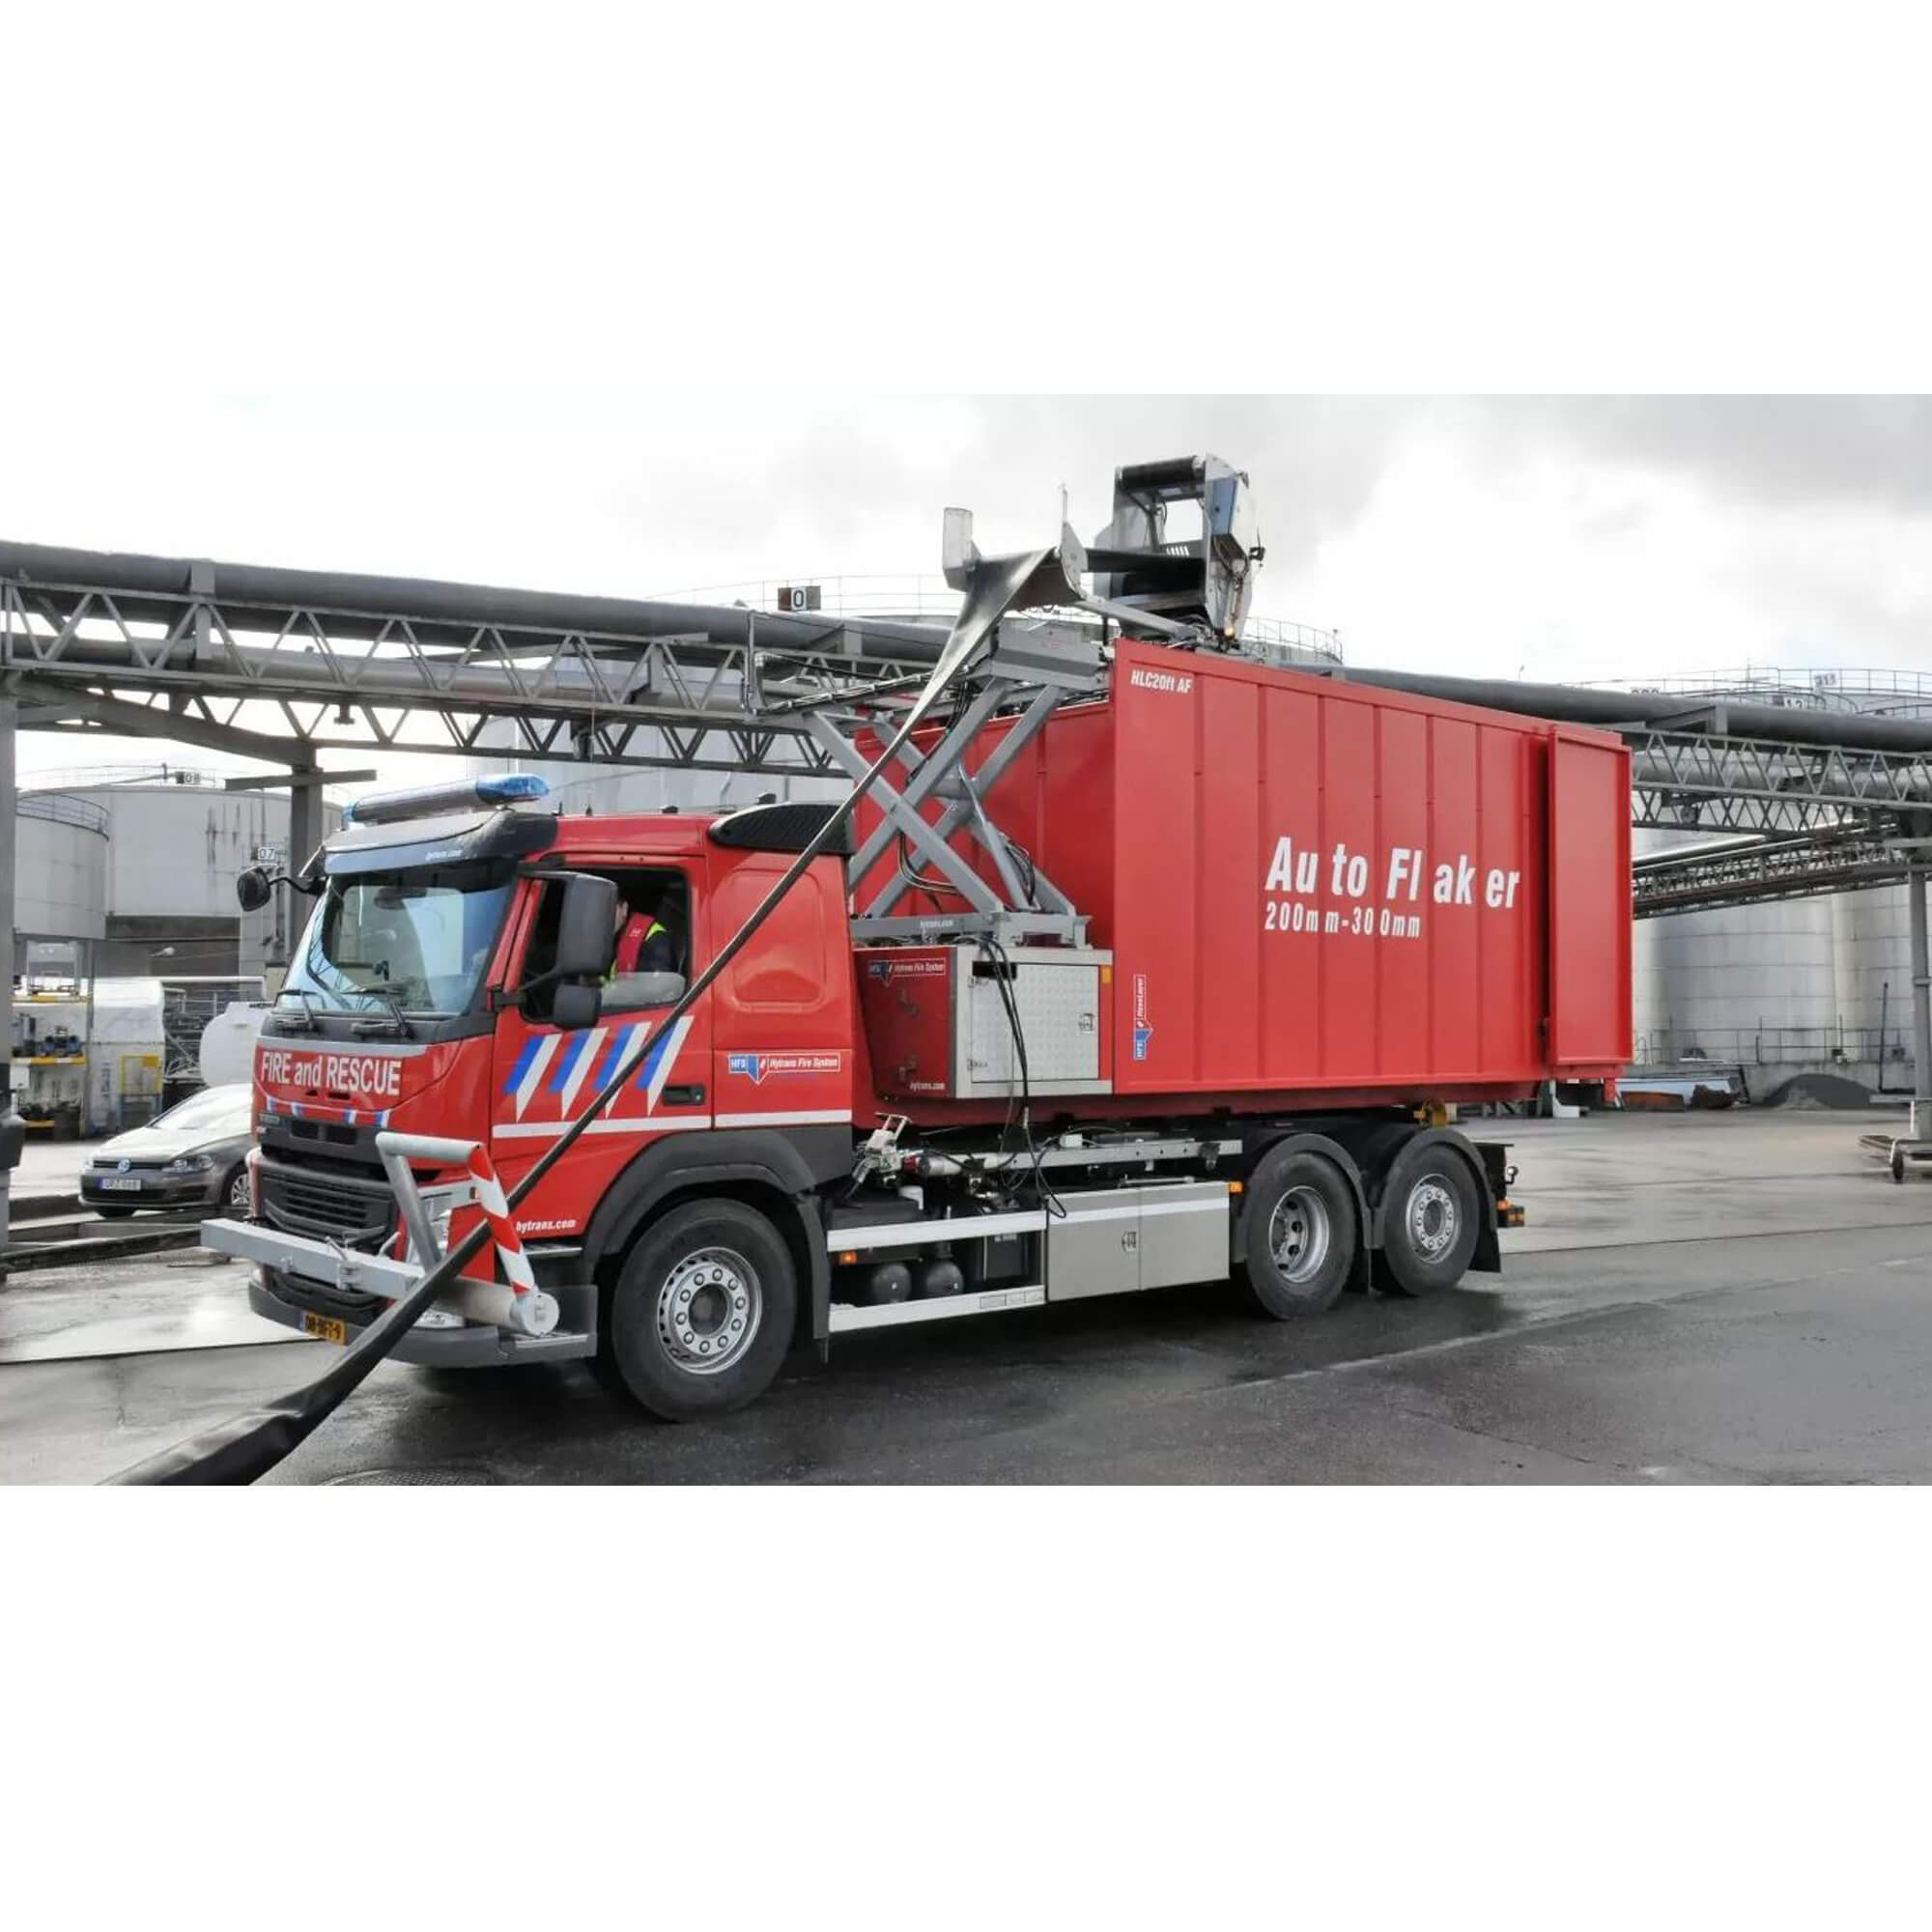 AutoFlaker Hose Handling for Fire Truck, Hytrans System